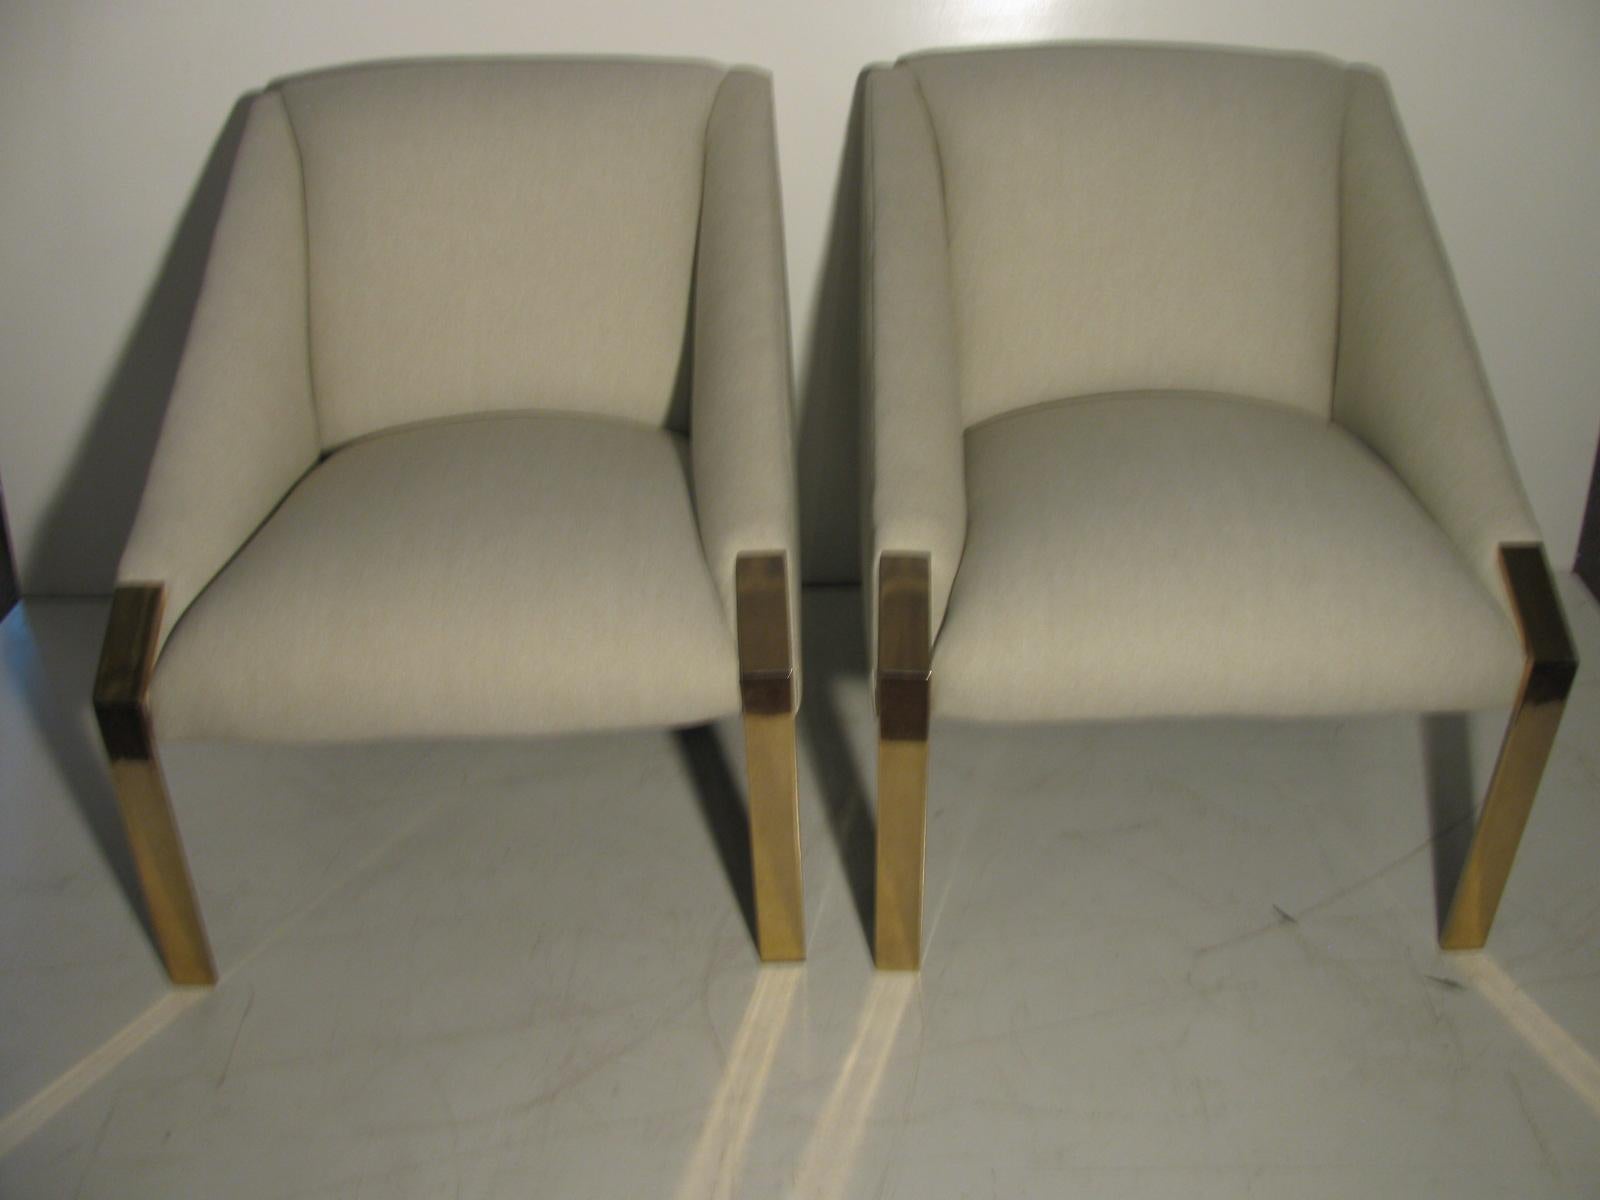 Pair of Mid-Century Modern Lounge Club Chairs (Ende des 20. Jahrhunderts)